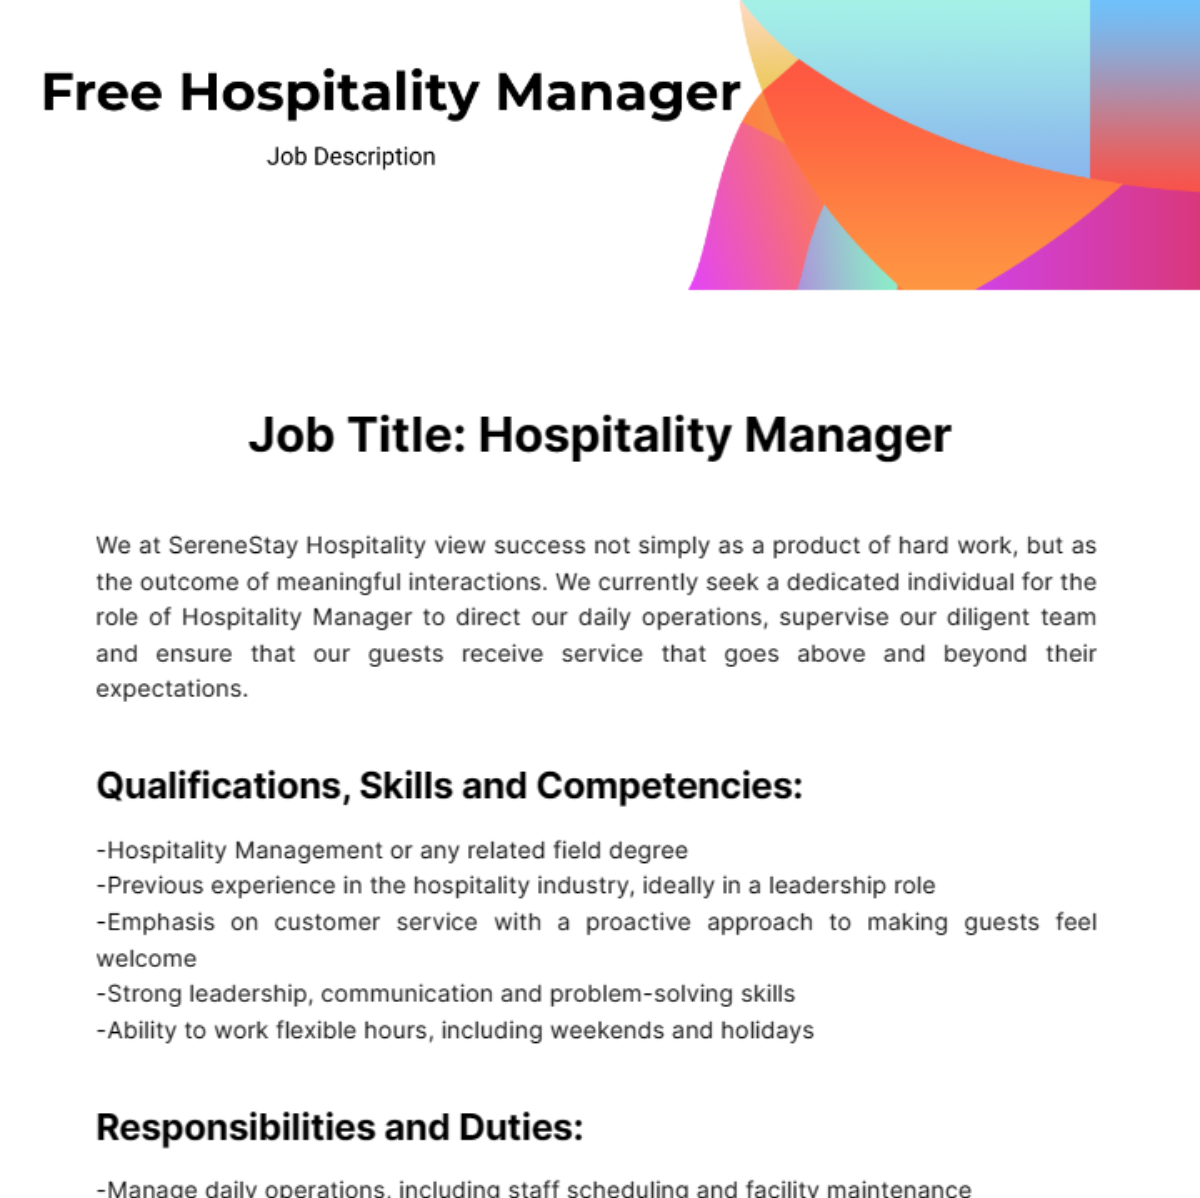 Free Hospitality Manager Job Description Template